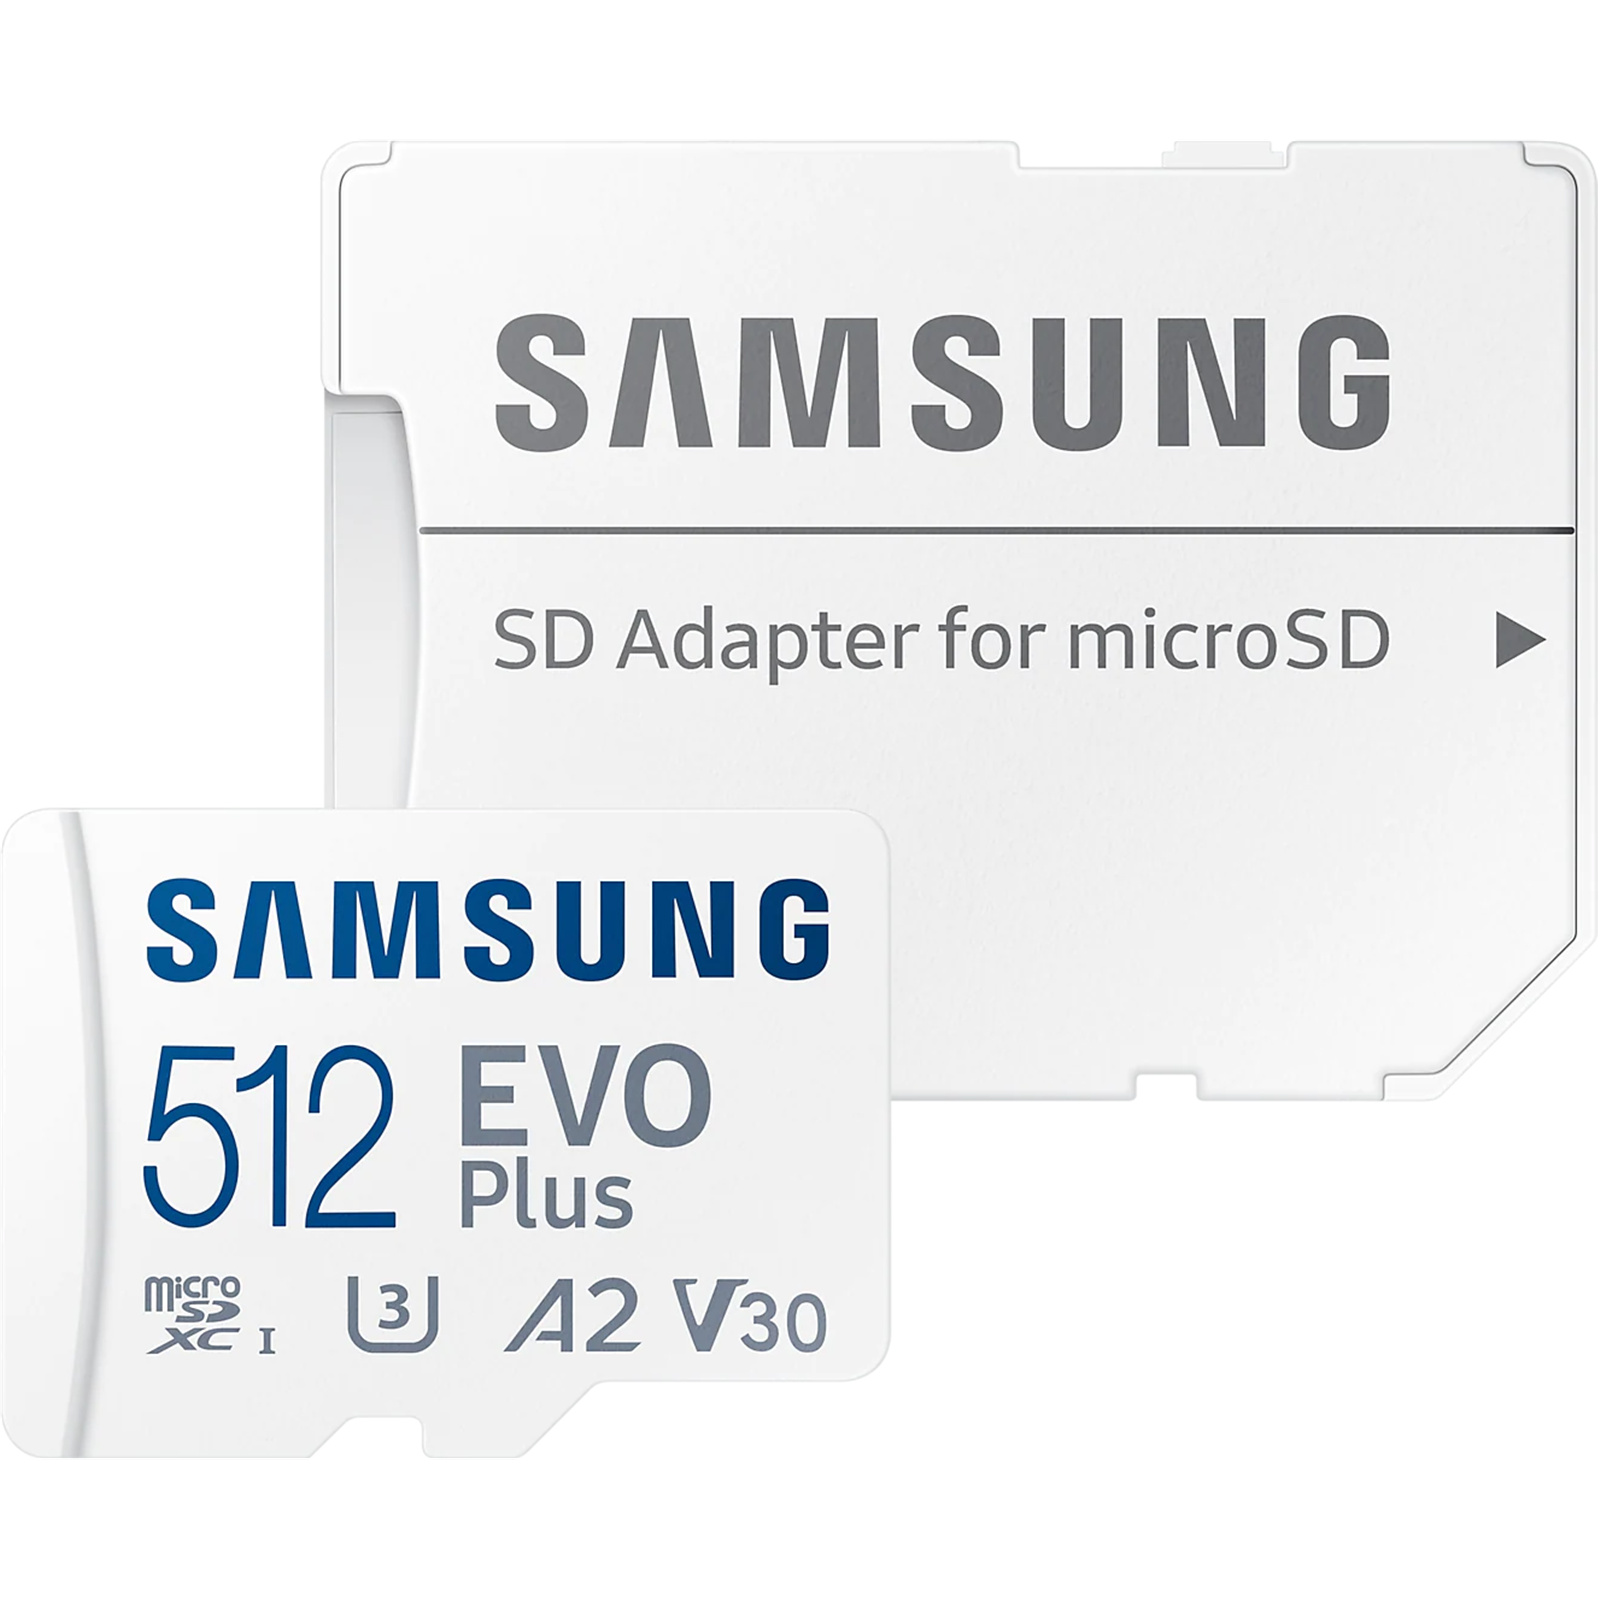 Samsung Sdxc 64gb Evo